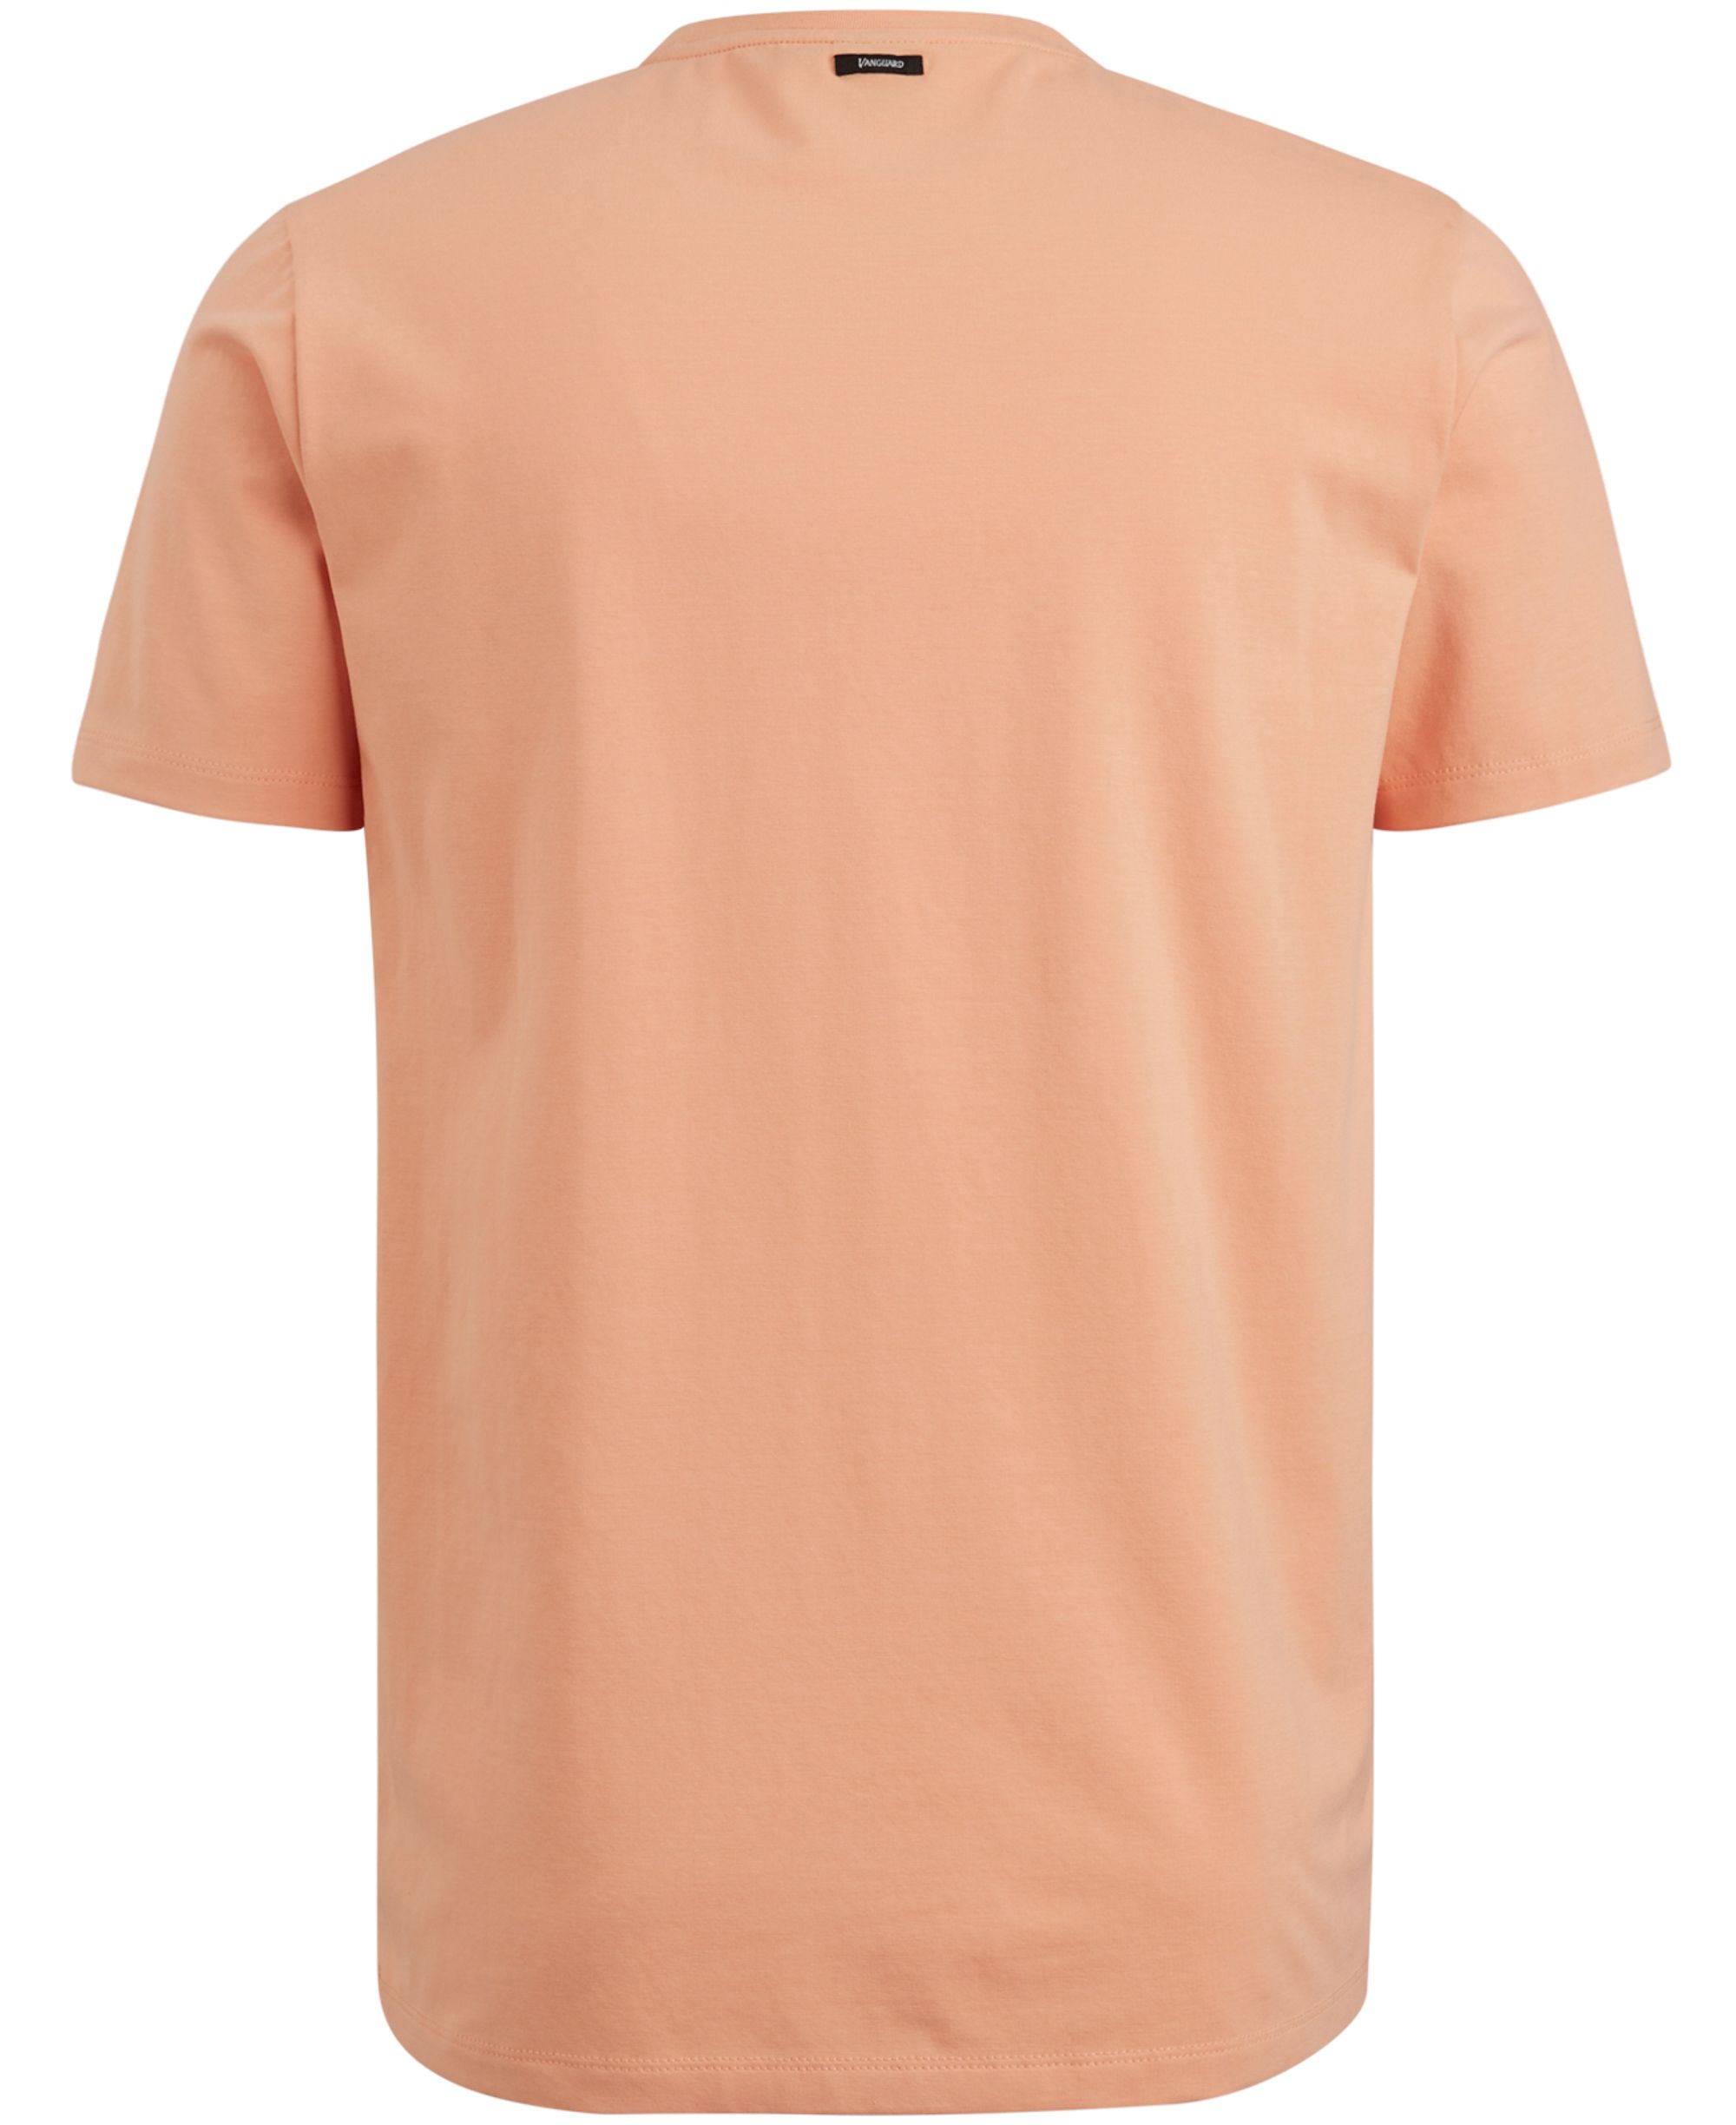 Vanguard T-shirt KM Oranje uni 085698-001-L